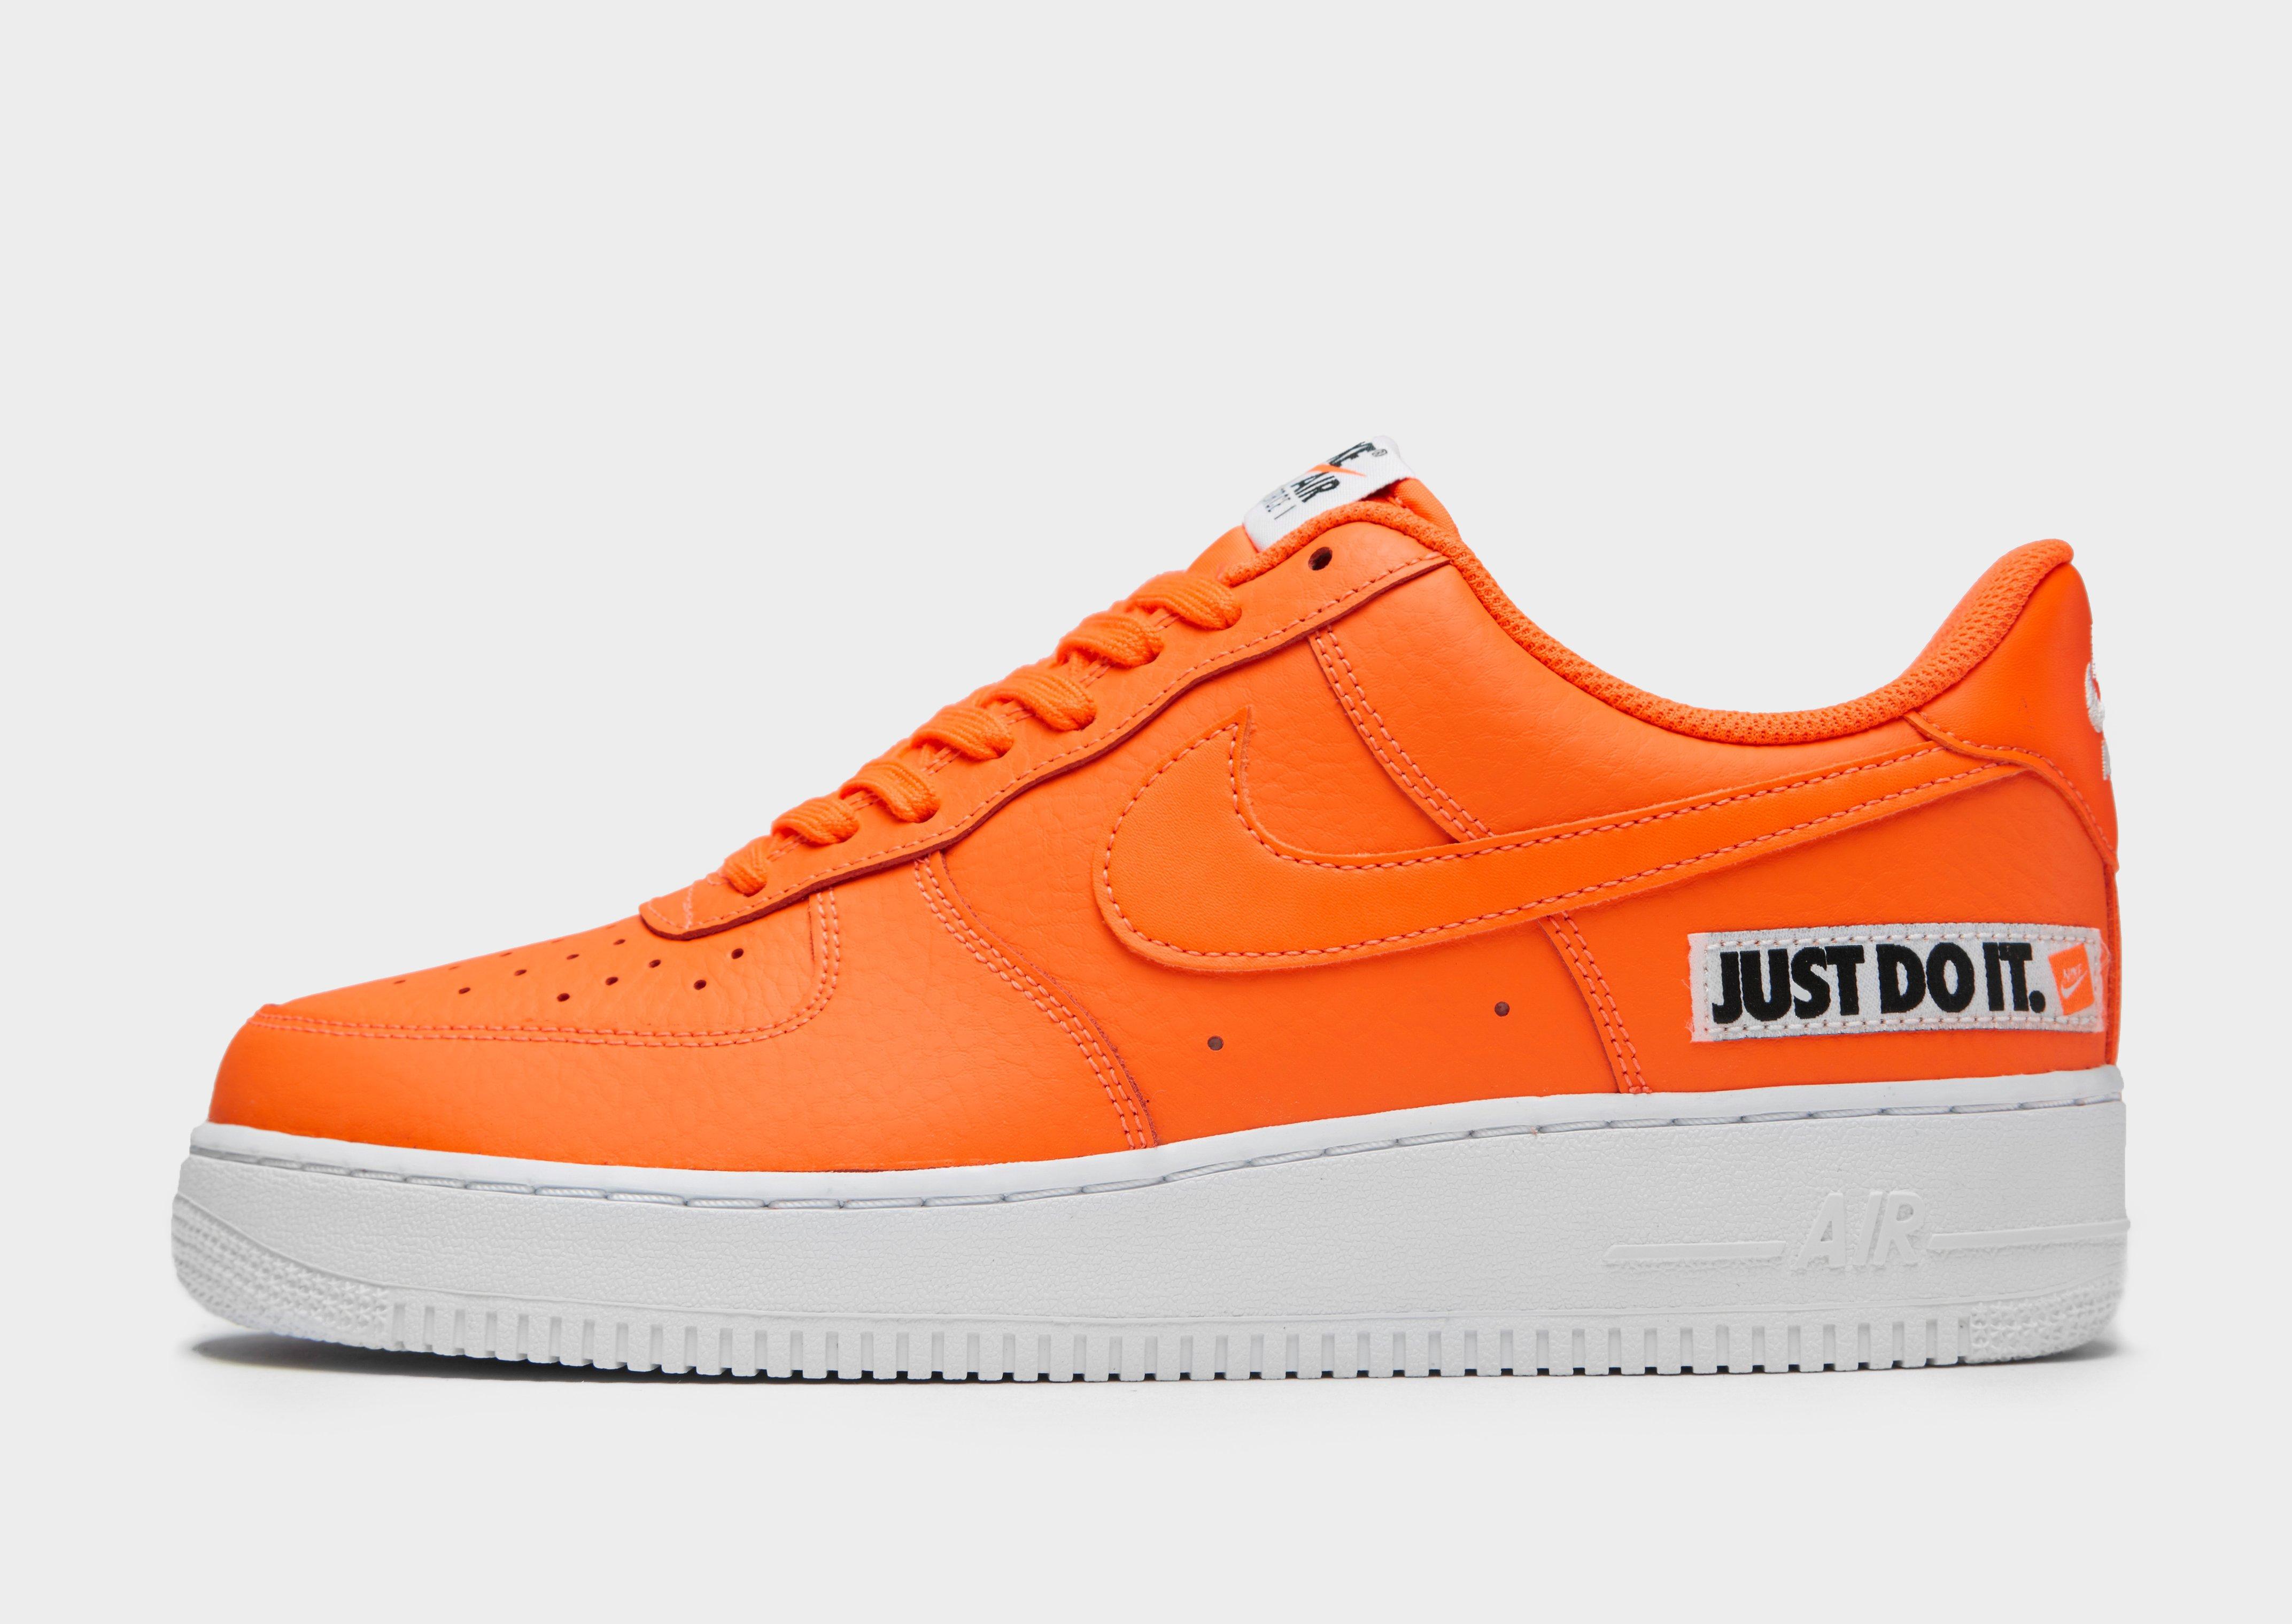 Nike Air Force 1 '07 Lv8 Jdi Leather Men's Shoe in Orange/White (Orange)  for Men - Lyst